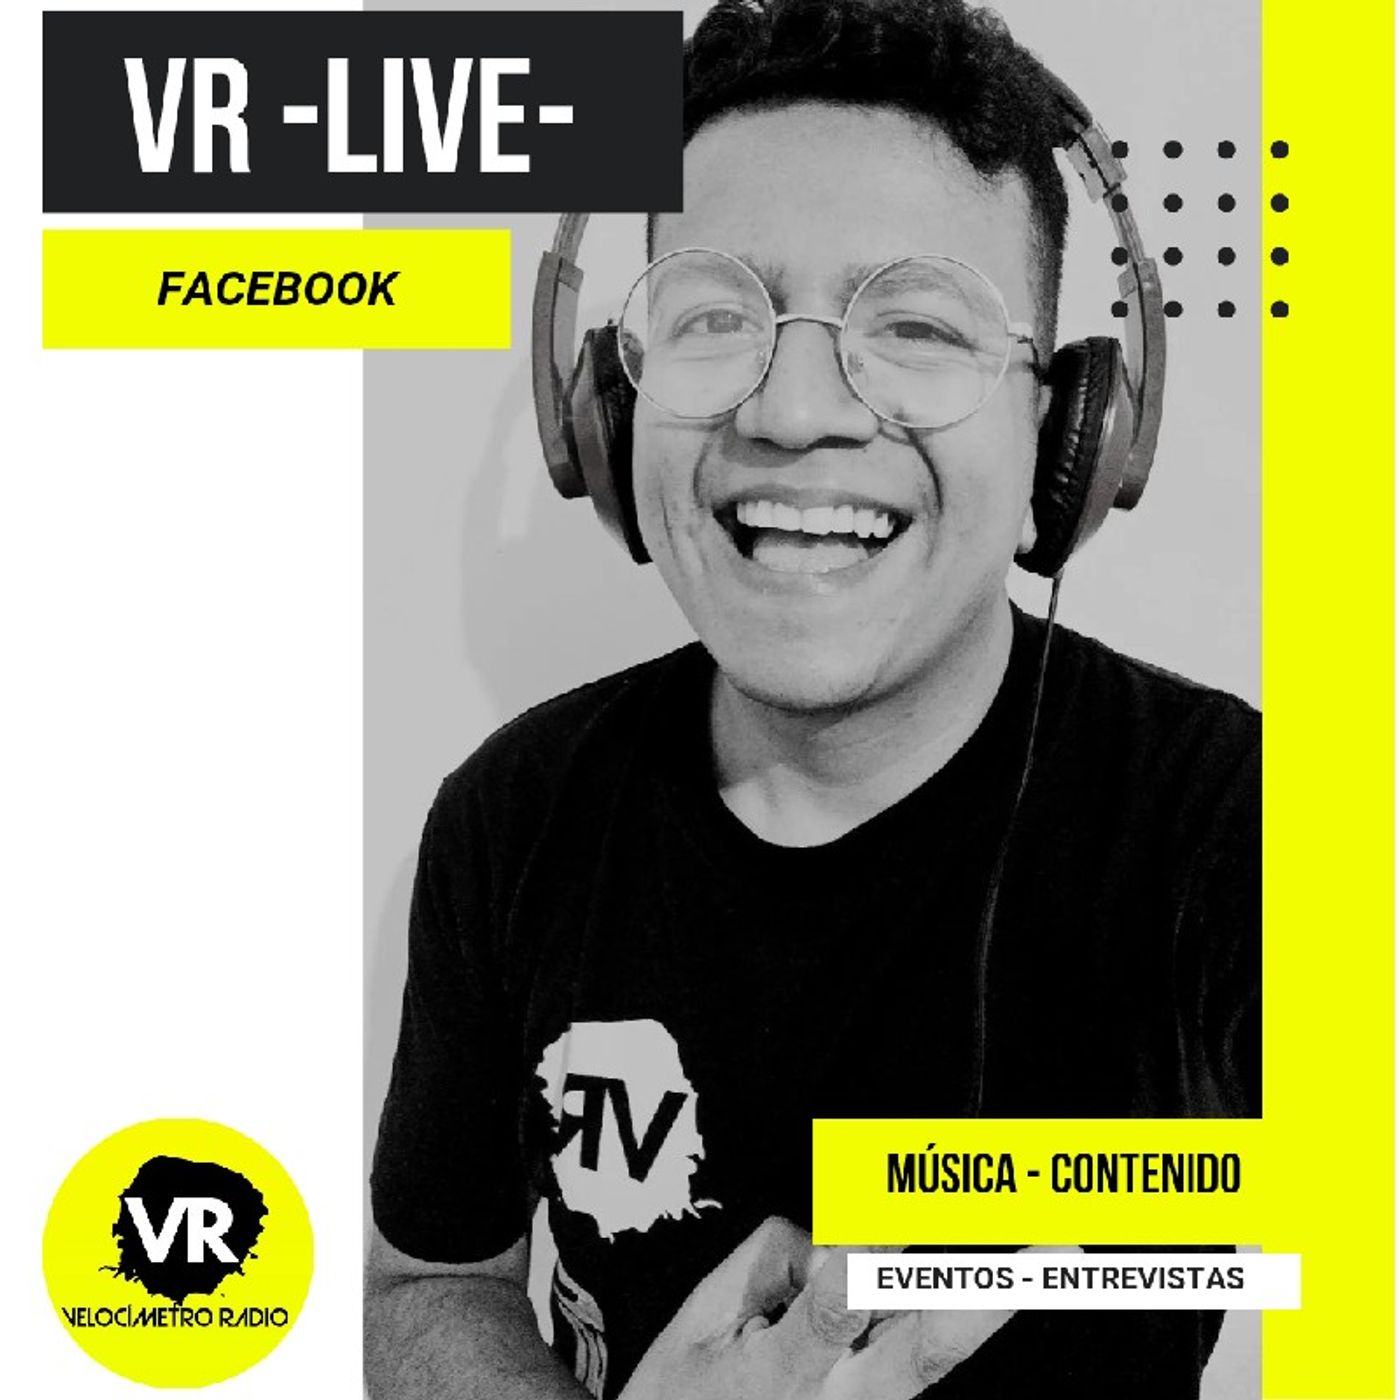 VR - LIVE - 0601